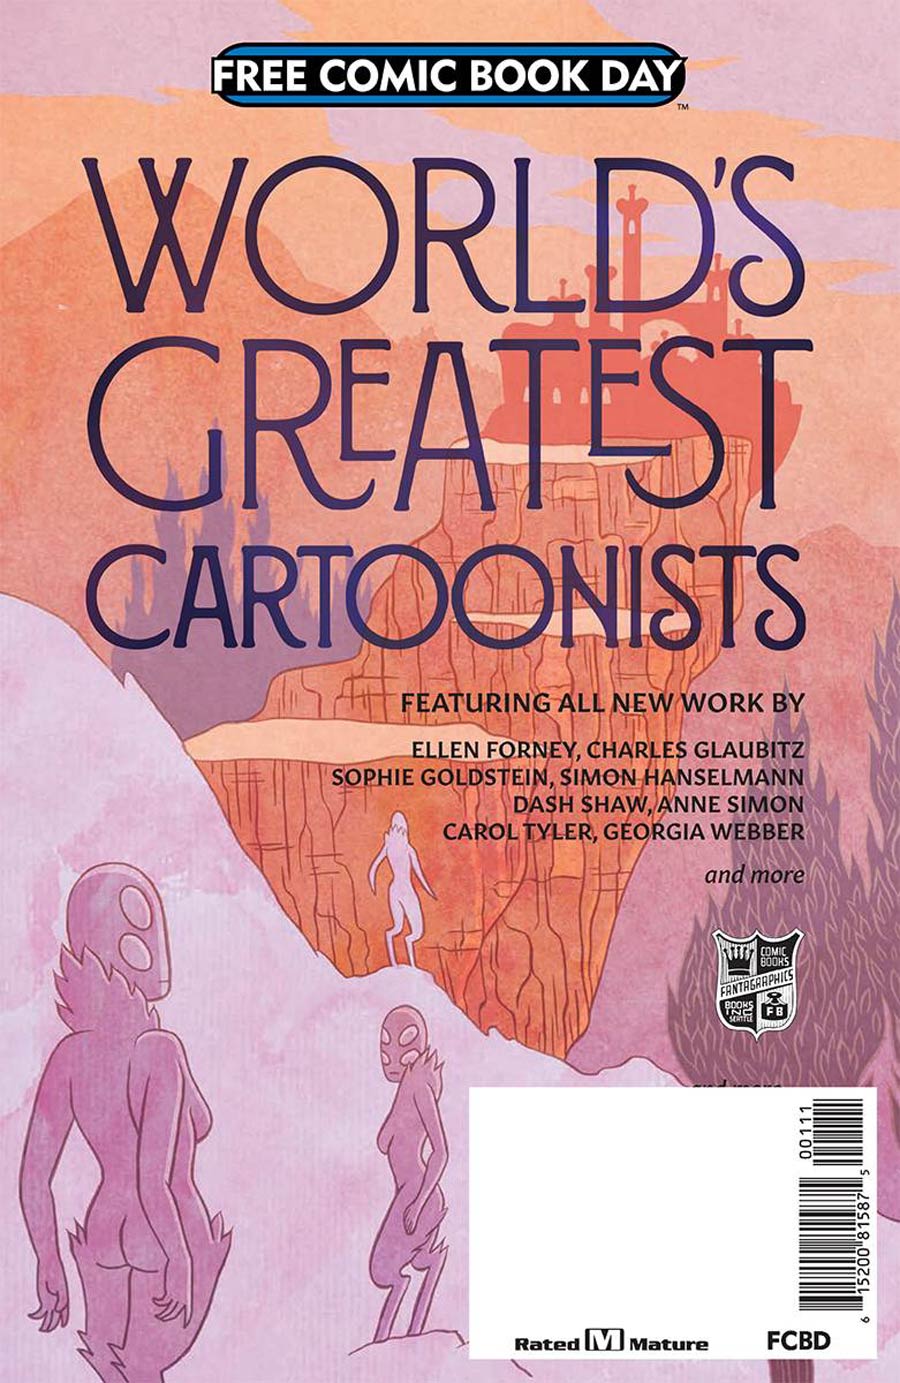 Worlds Greatest Cartoonists FCBD 2018